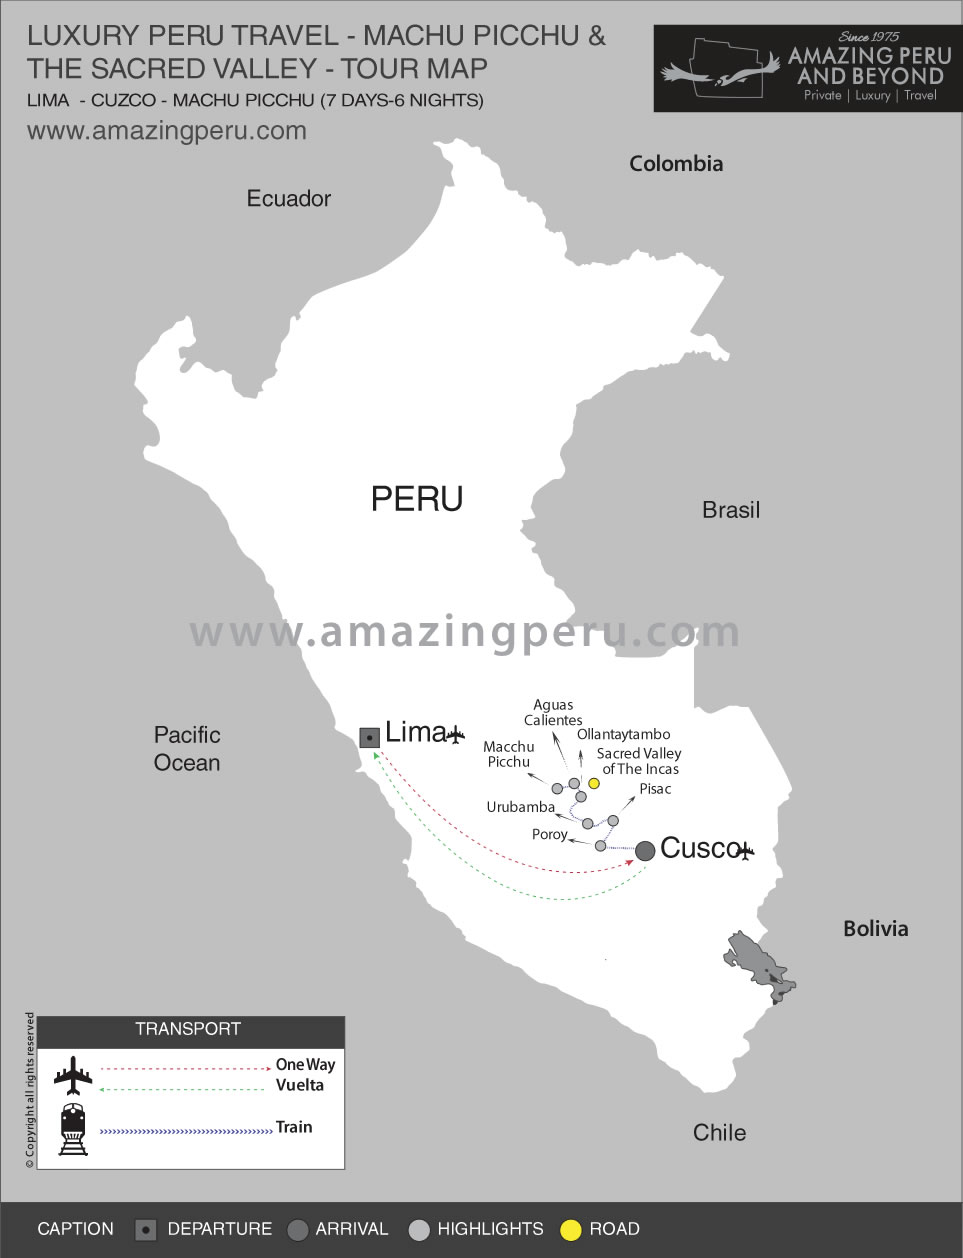 Luxury Peru Travel: Machu Picchu & the Sacred Valley - 7 days / 6 nights.